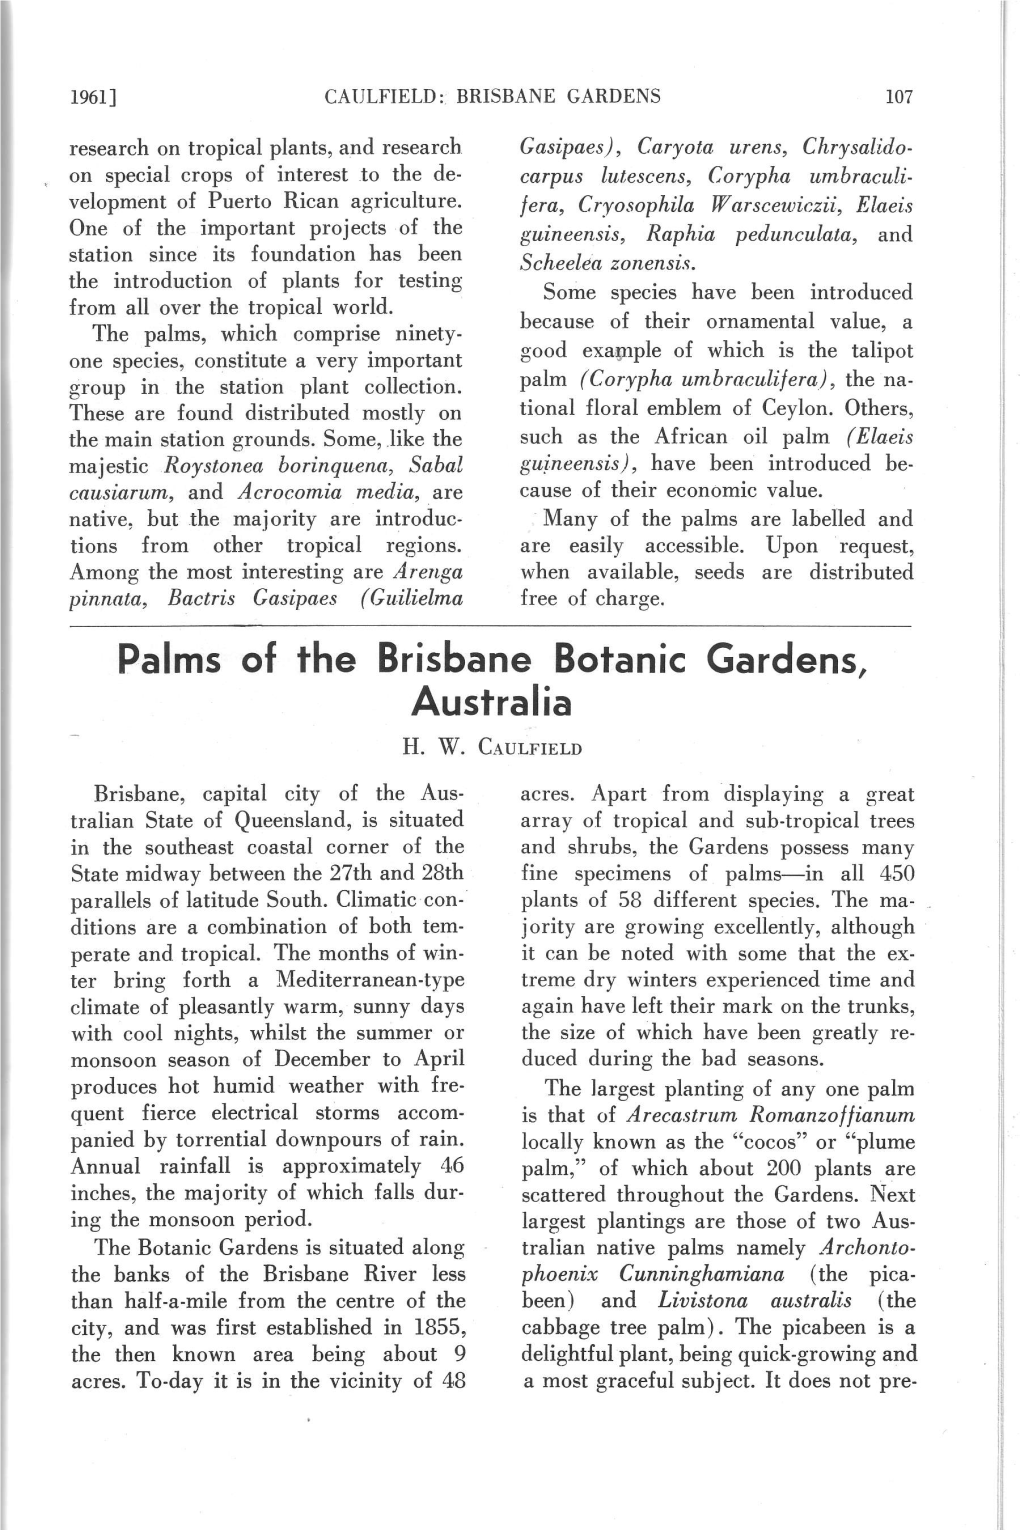 Australia Palms of Fhe Brisbane Botanic Gardens